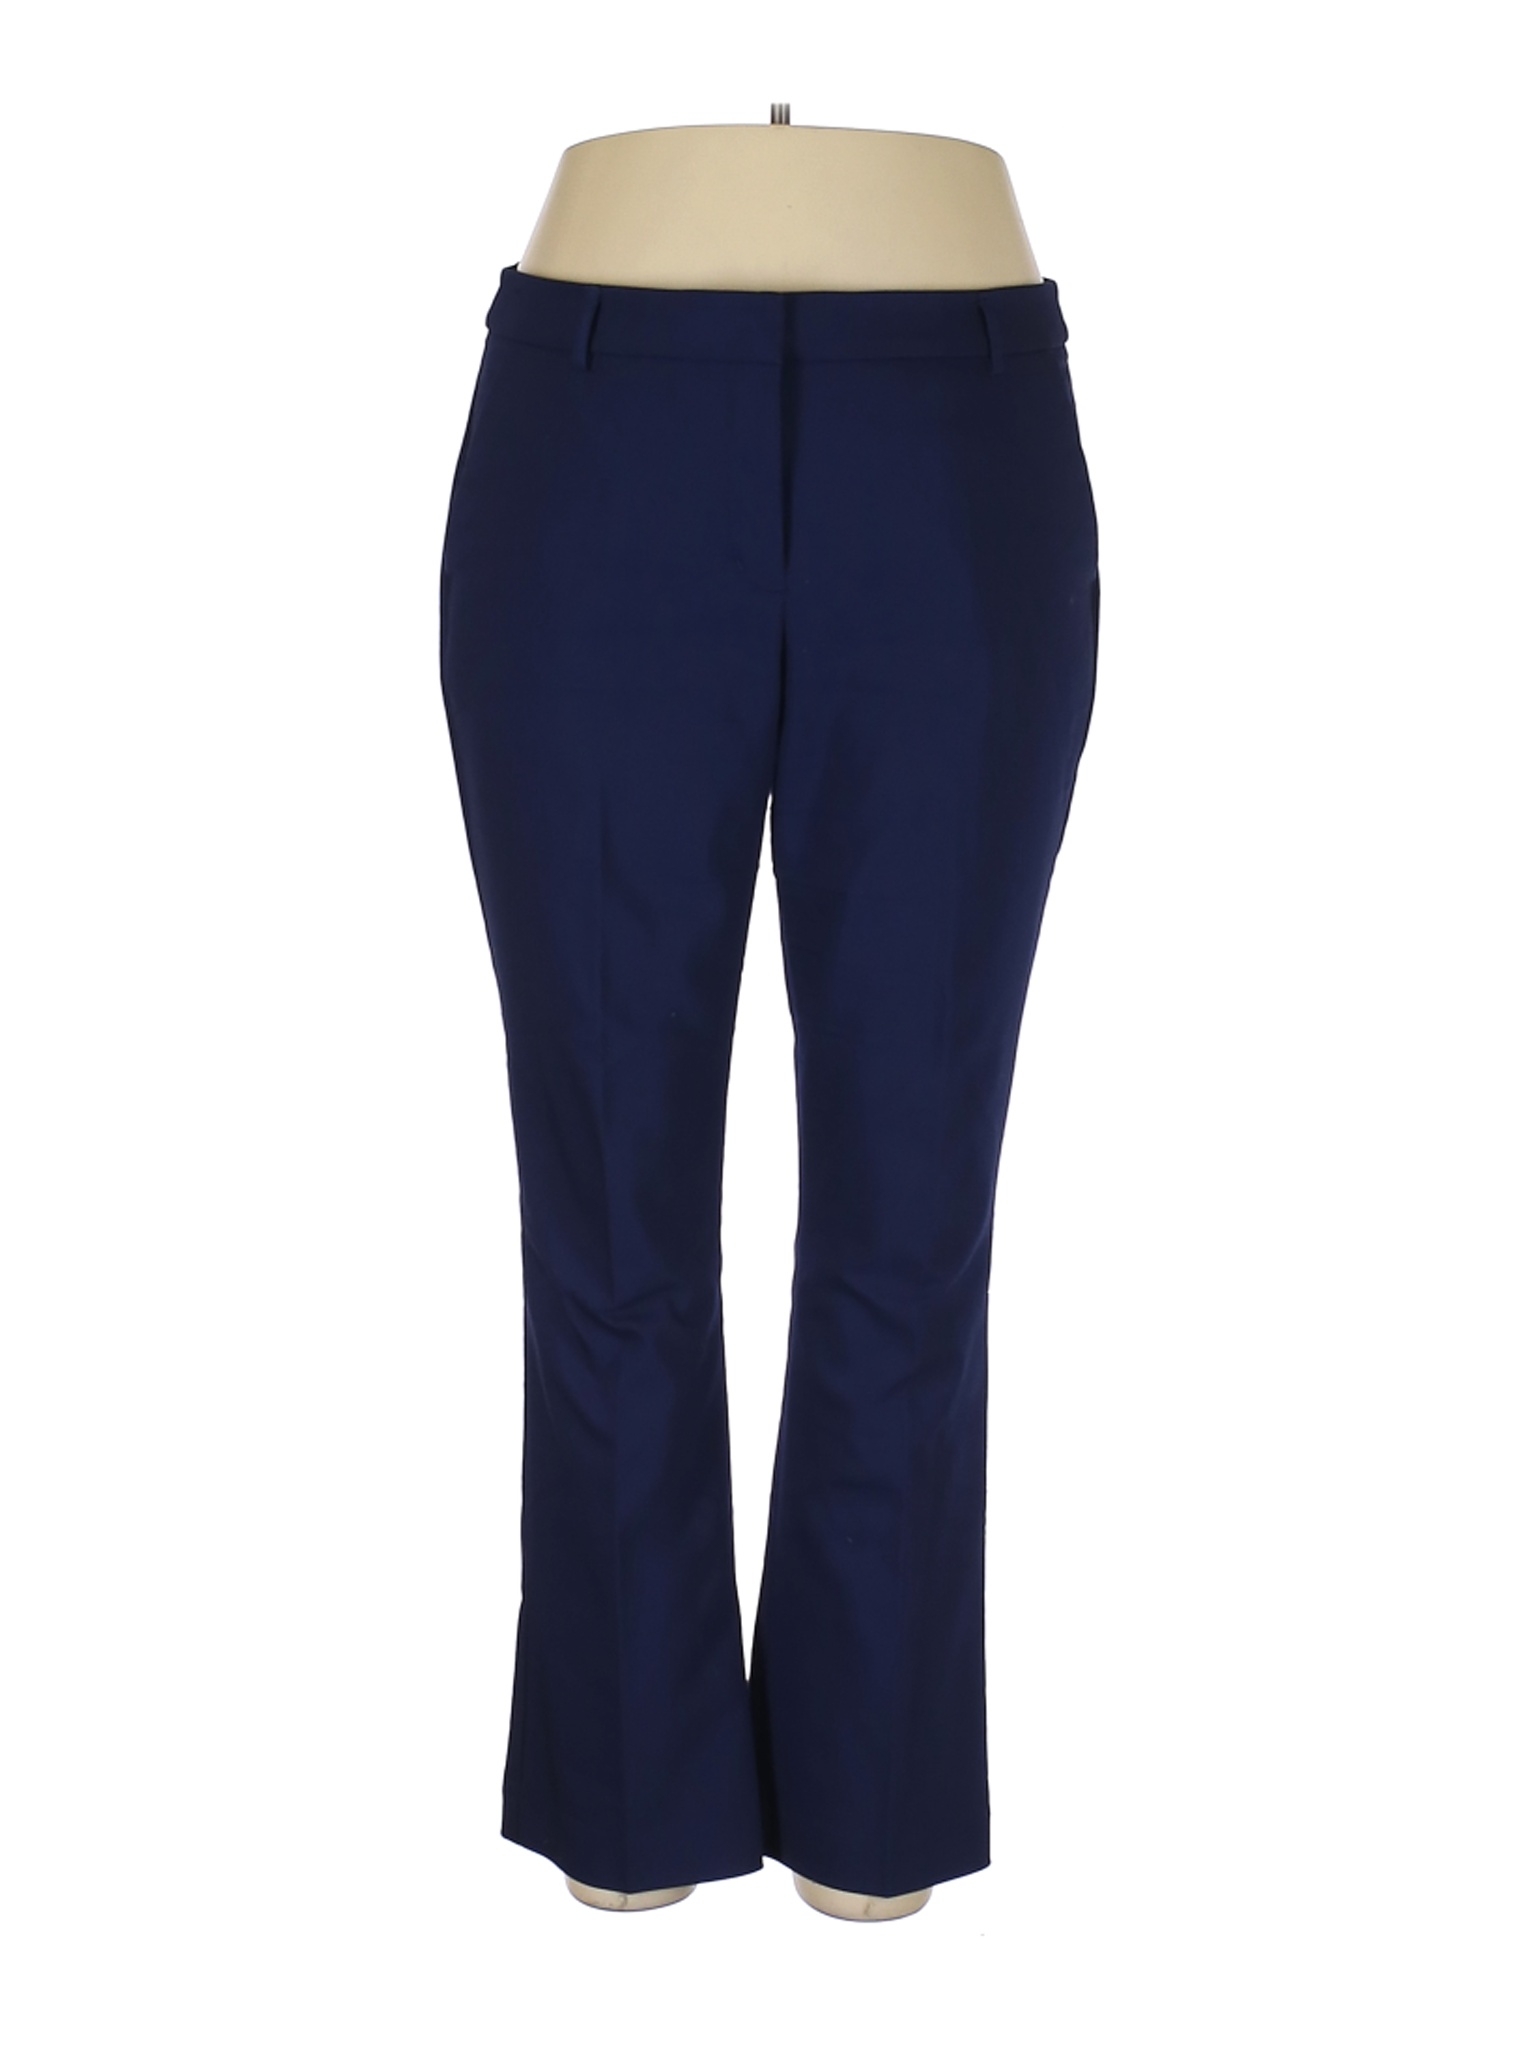 Express Women Blue Dress Pants S | eBay